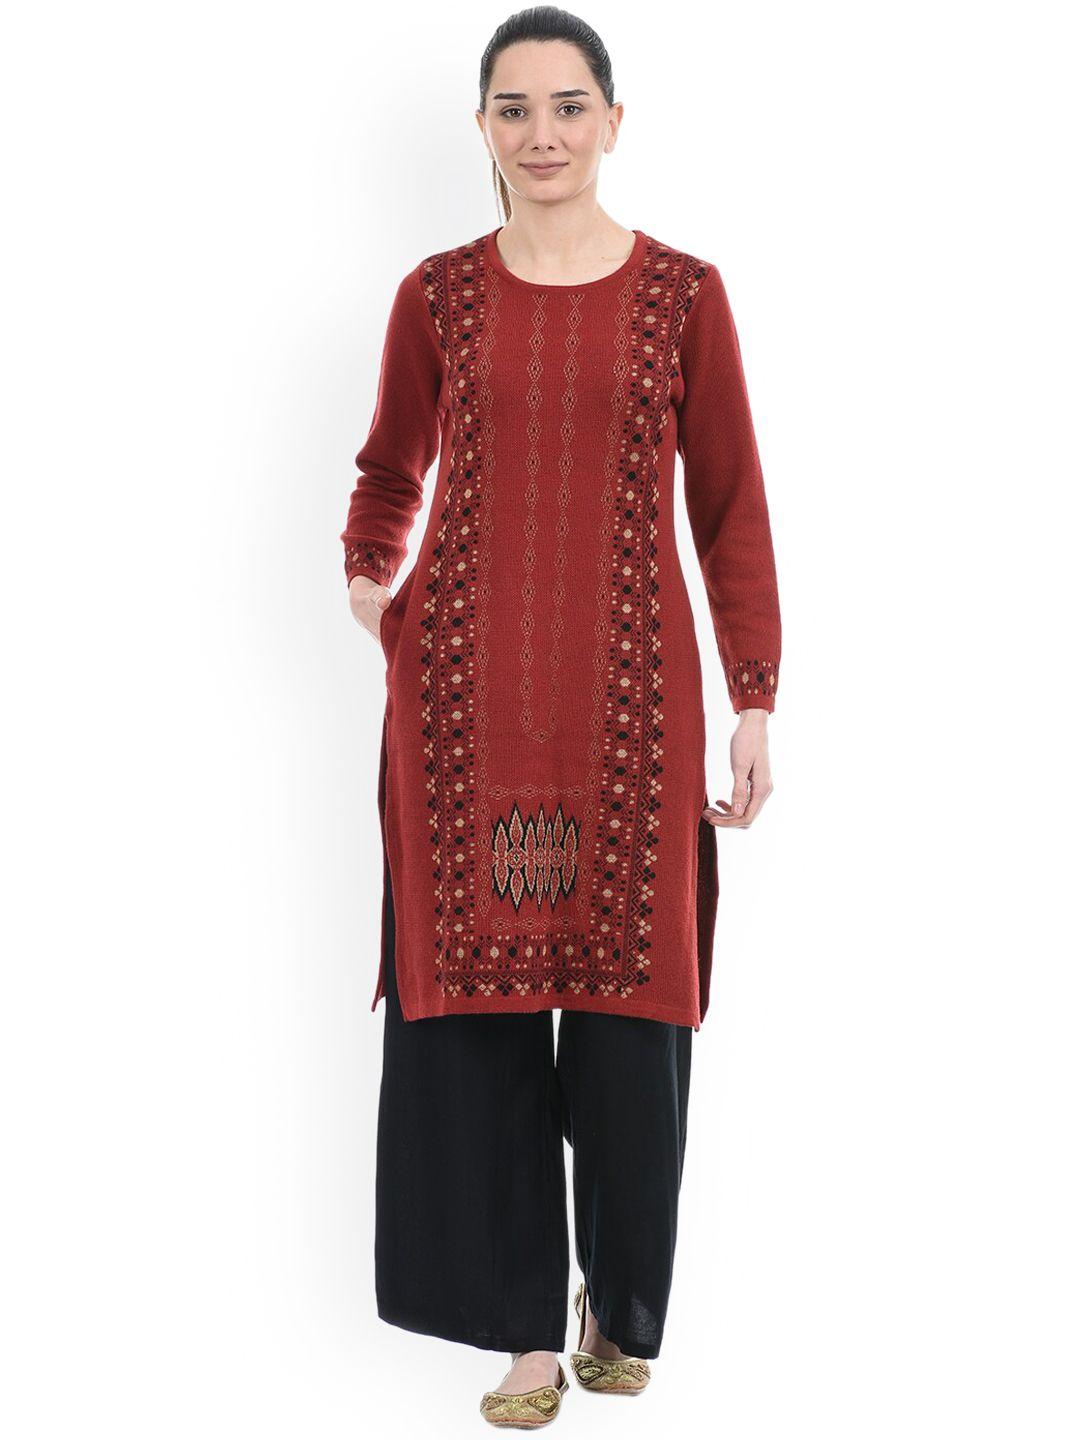 american eye women maroon embroidered thread work winter sweater kurta